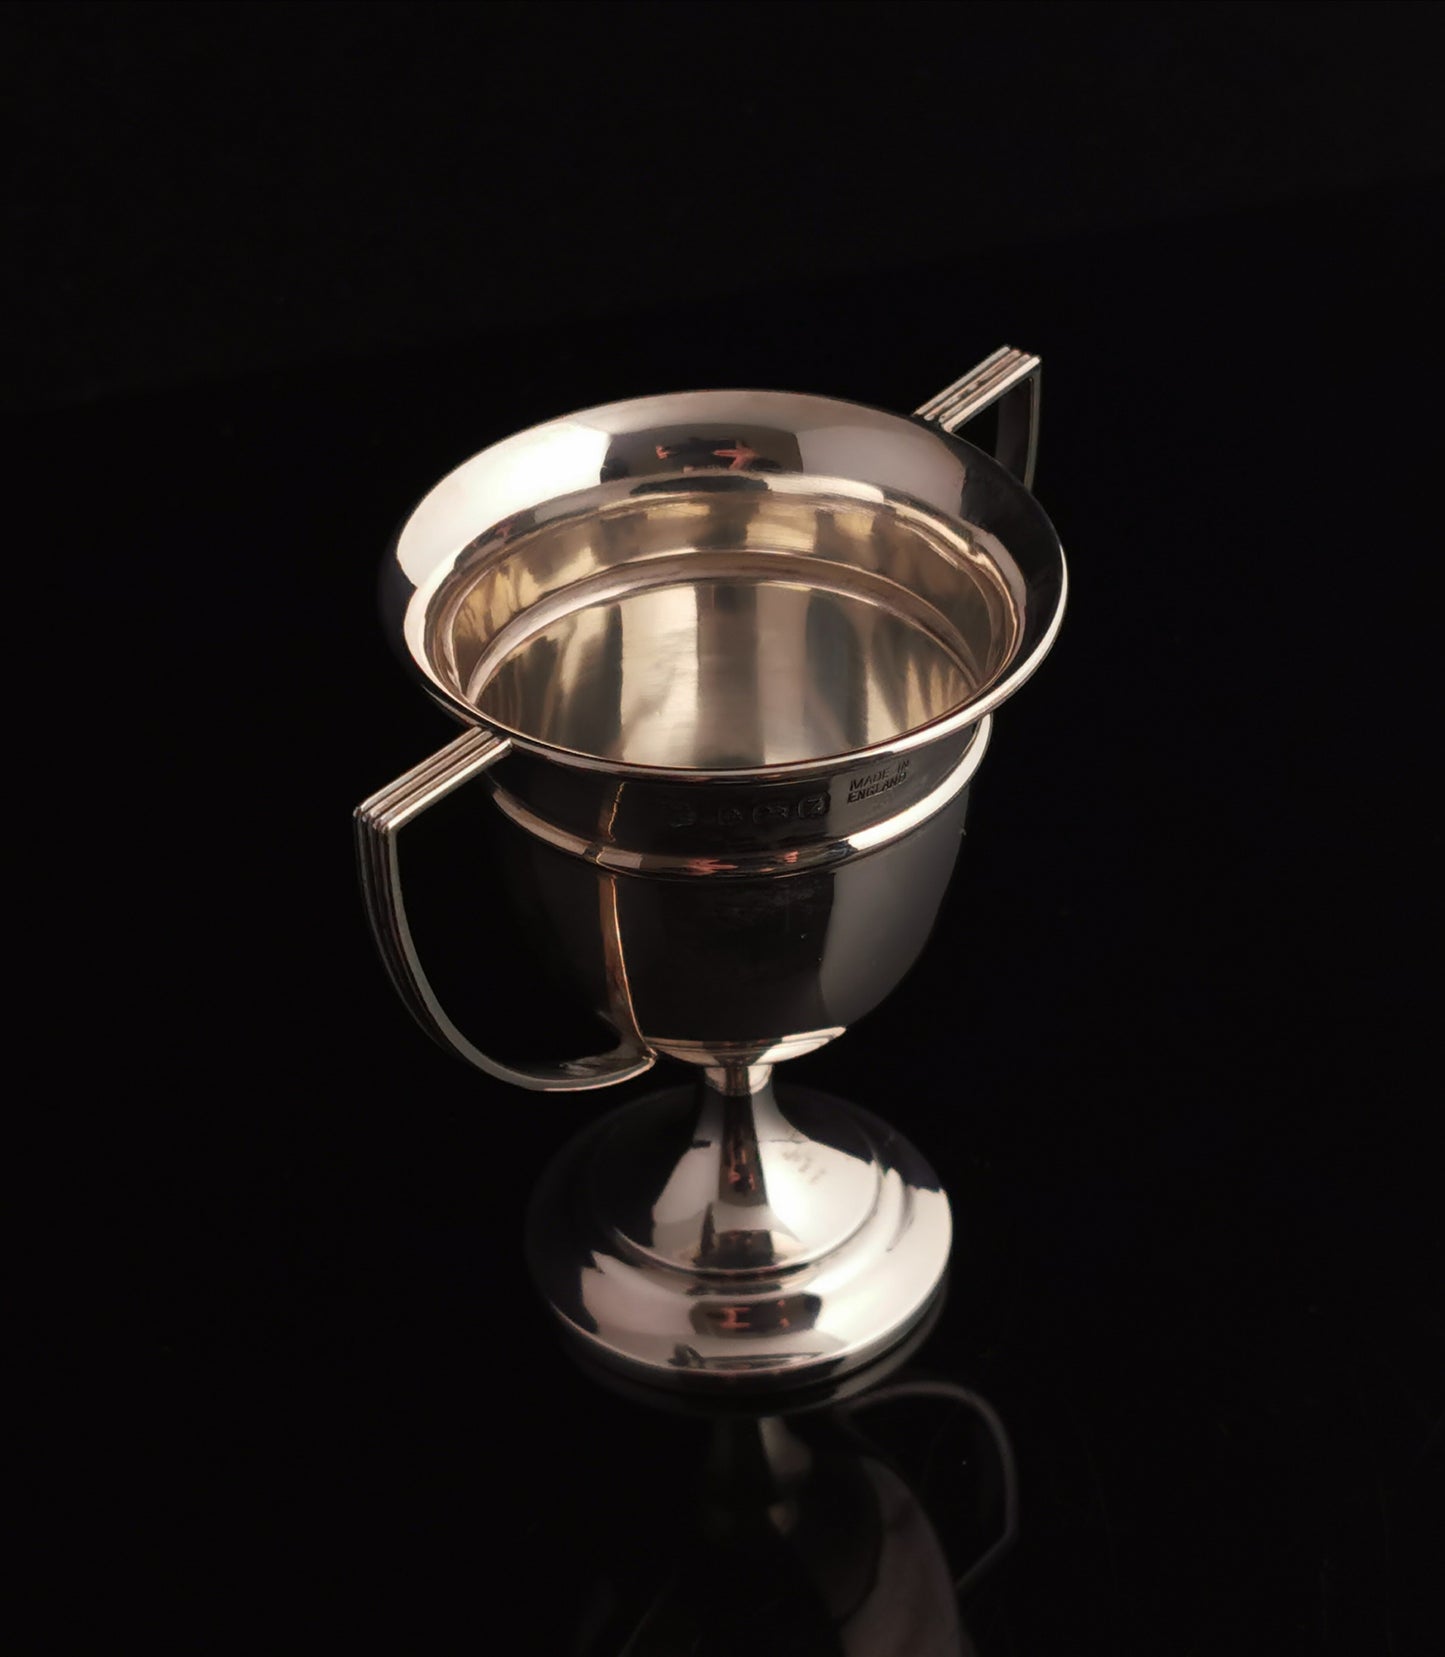 Vintage Sterling silver trophy cup, 1940s